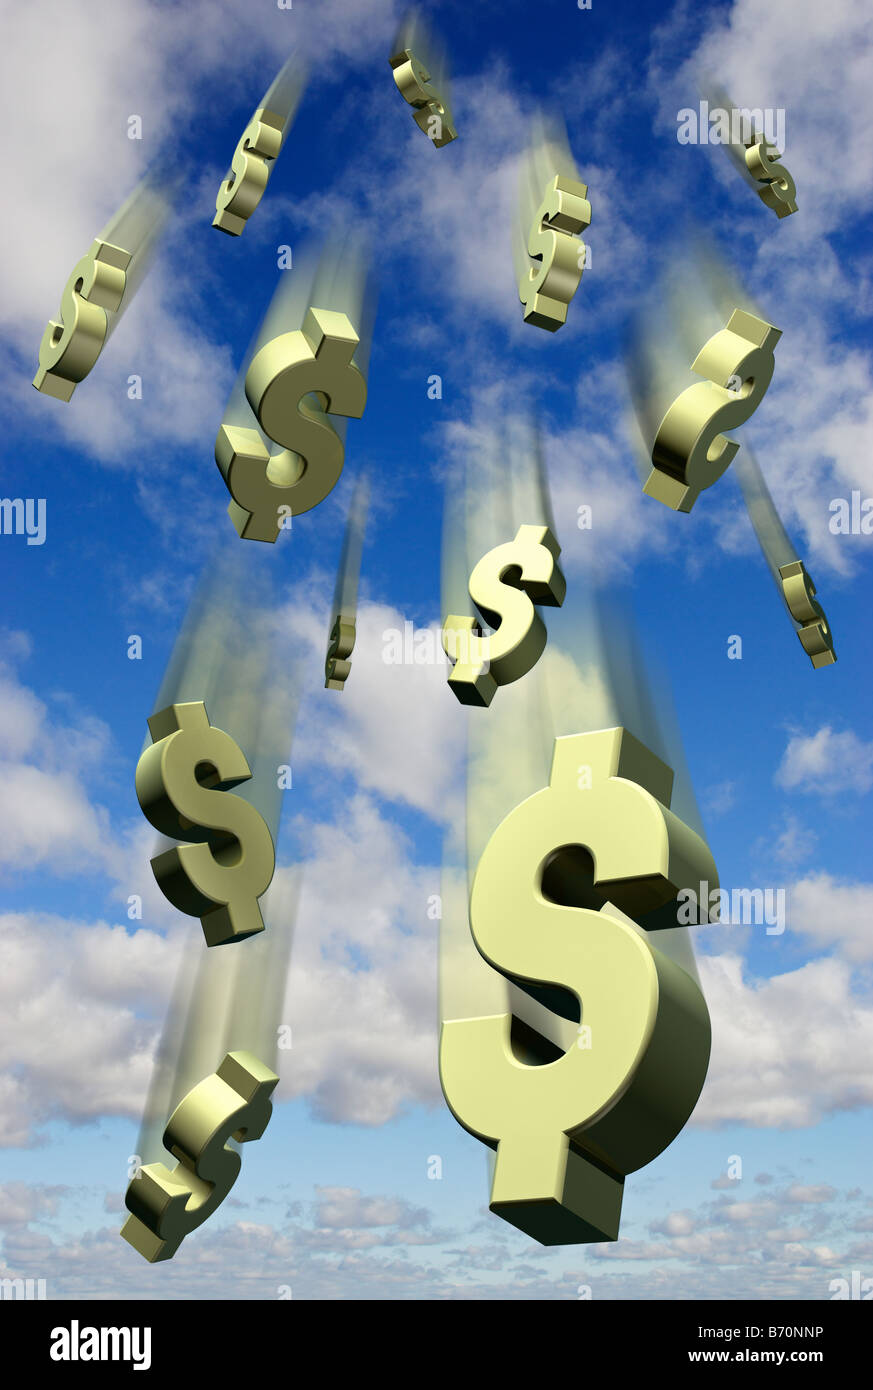 Fléchissement de symboles du dollar contre un ciel bleu - digital composite Banque D'Images